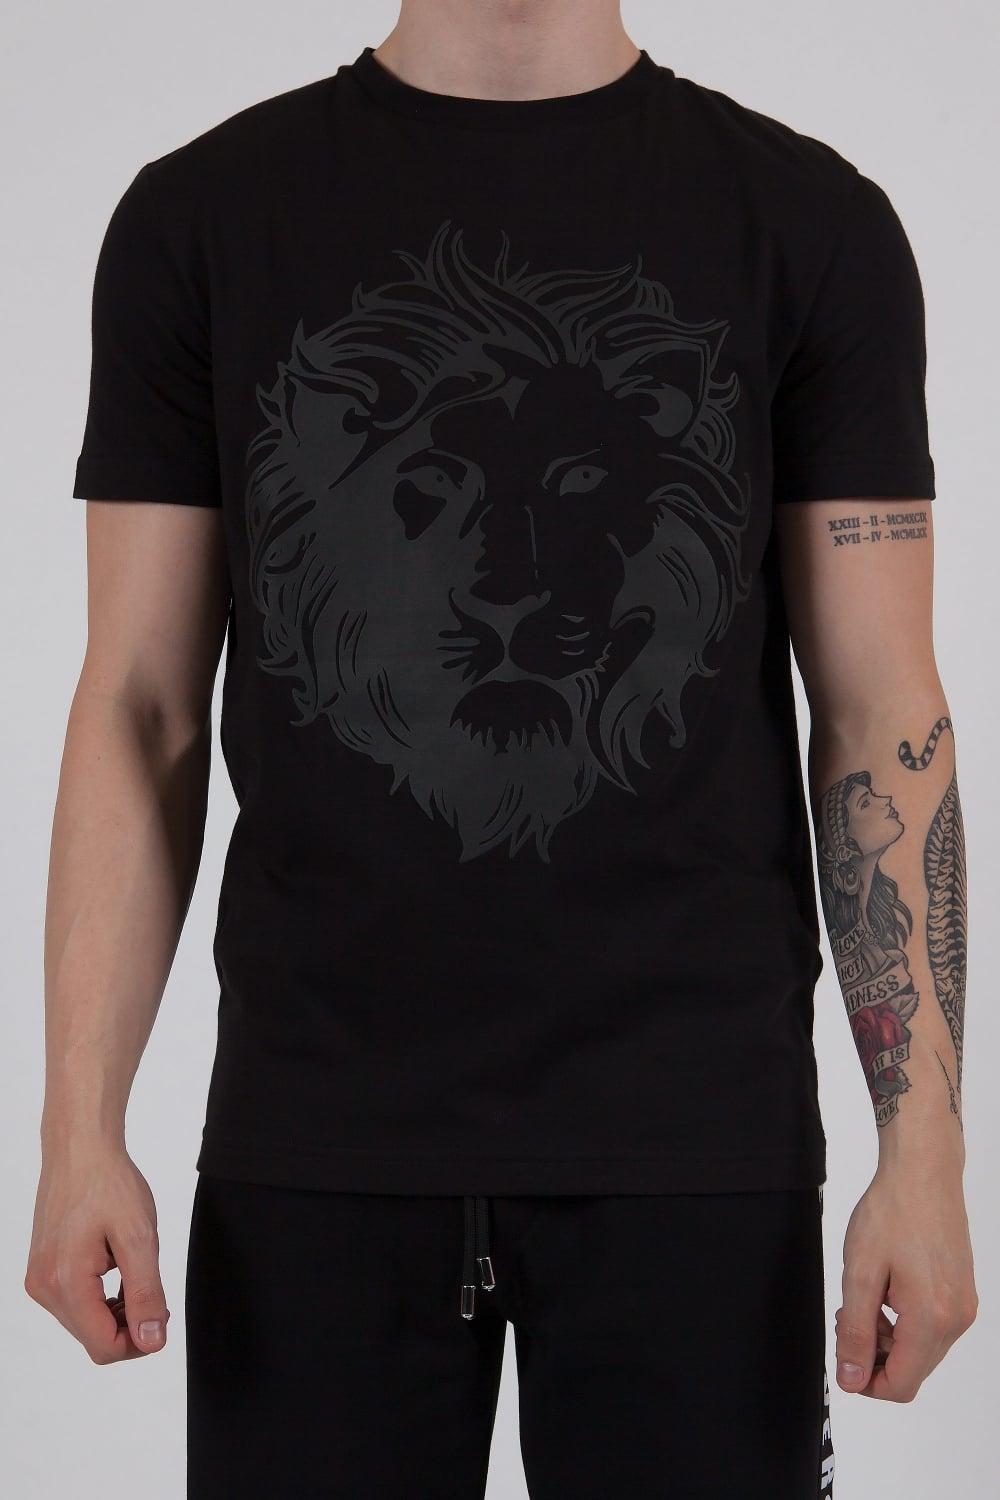 Shirt with Lion Logo - Versus Versace. Lion Logo Crew Neck T Shirt Black